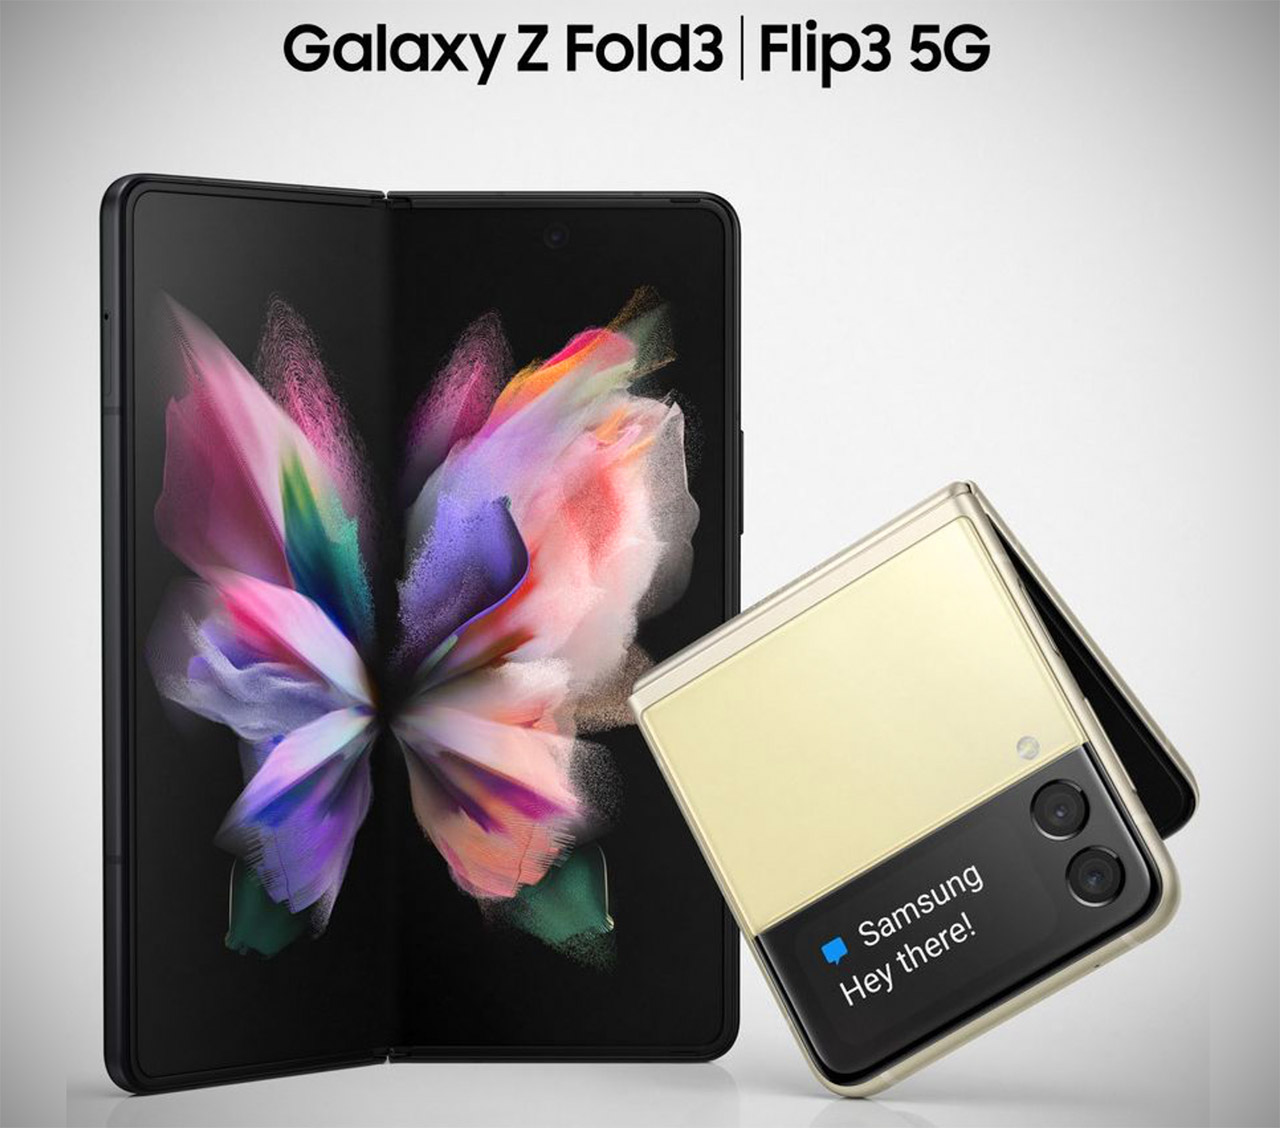 Samsung Galaxy Z Fold 3 Flip 3 5G Smartphones Leak